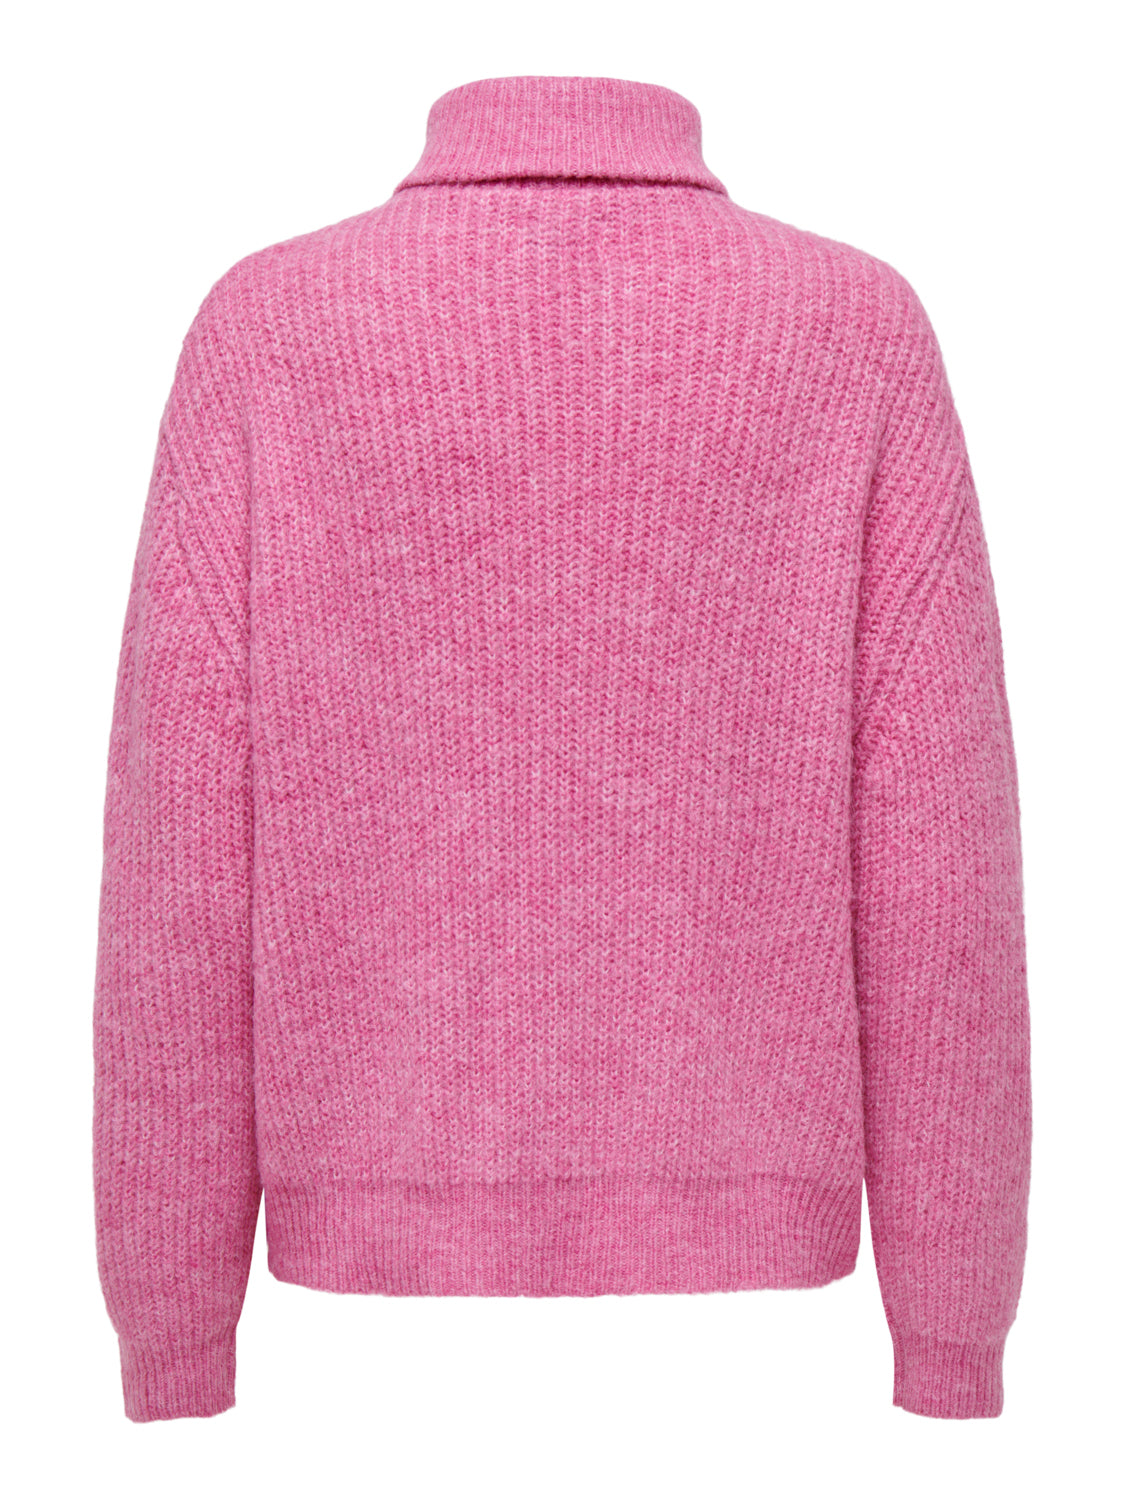 ONLBAKER Pullover - Shocking Pink